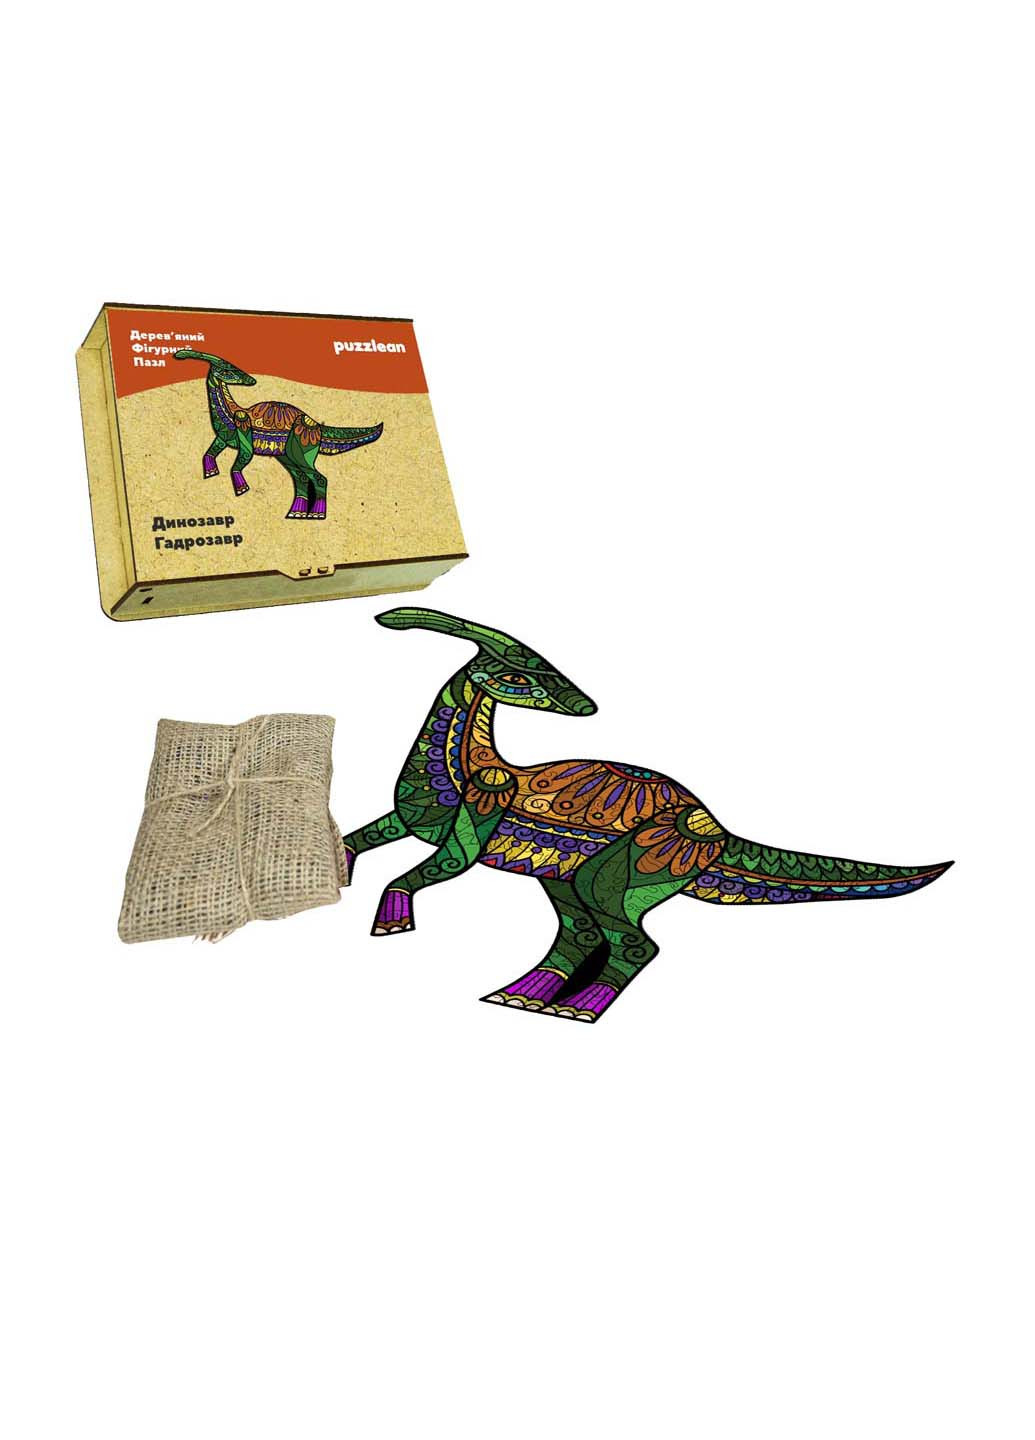 Пазл Динозавр Гадрозавр А4 Puzzlean (253857282)